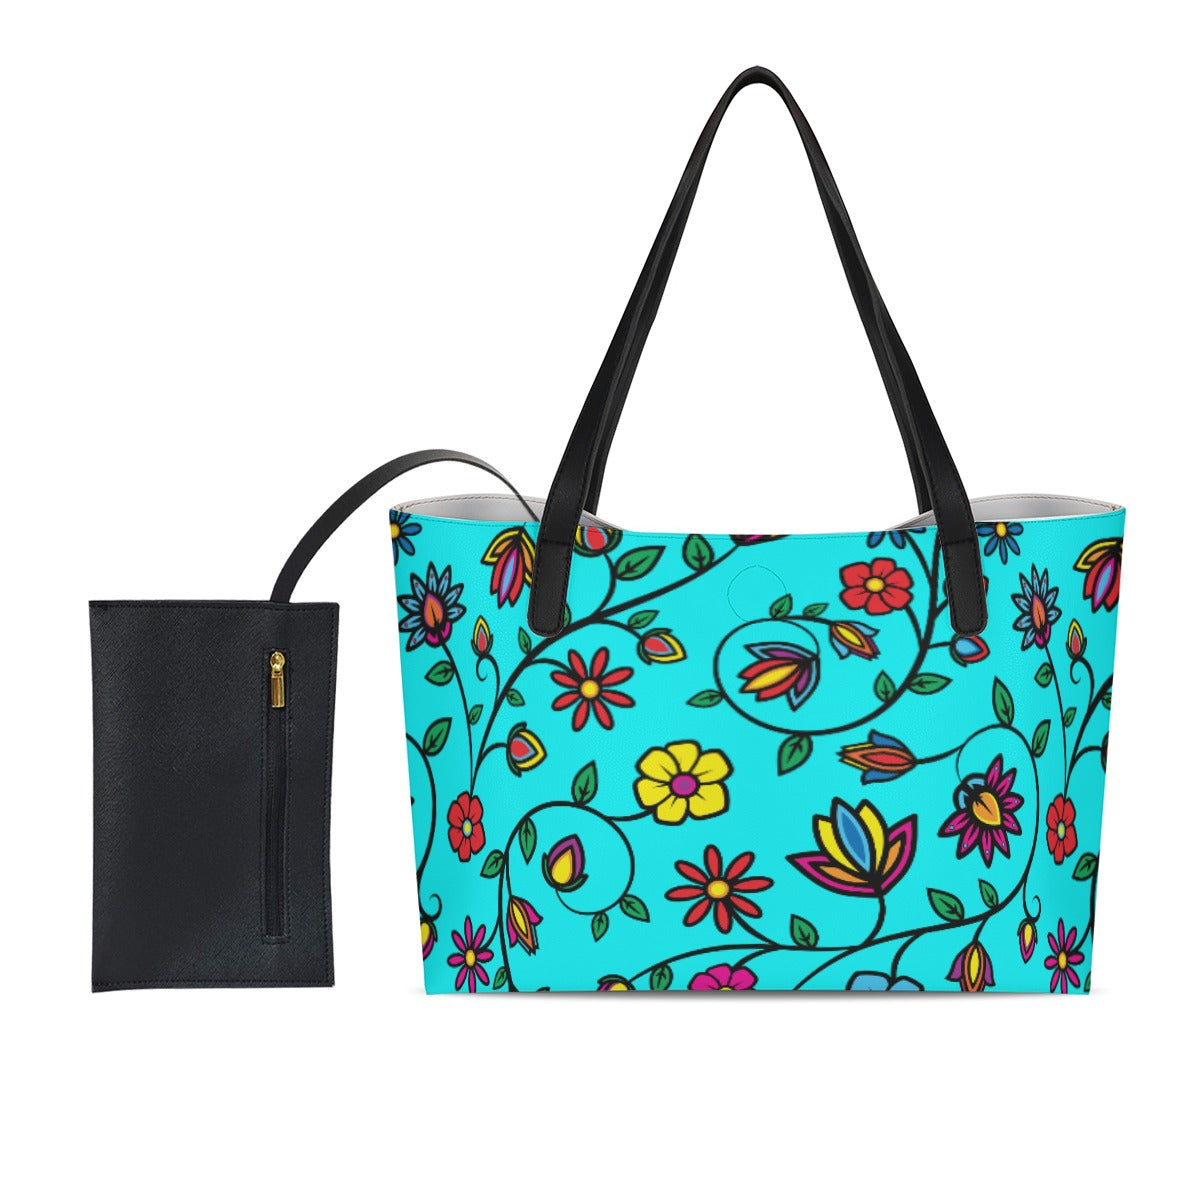 Nature's Nexus Turquoise Shopping Tote Bag With Black Mini Purse